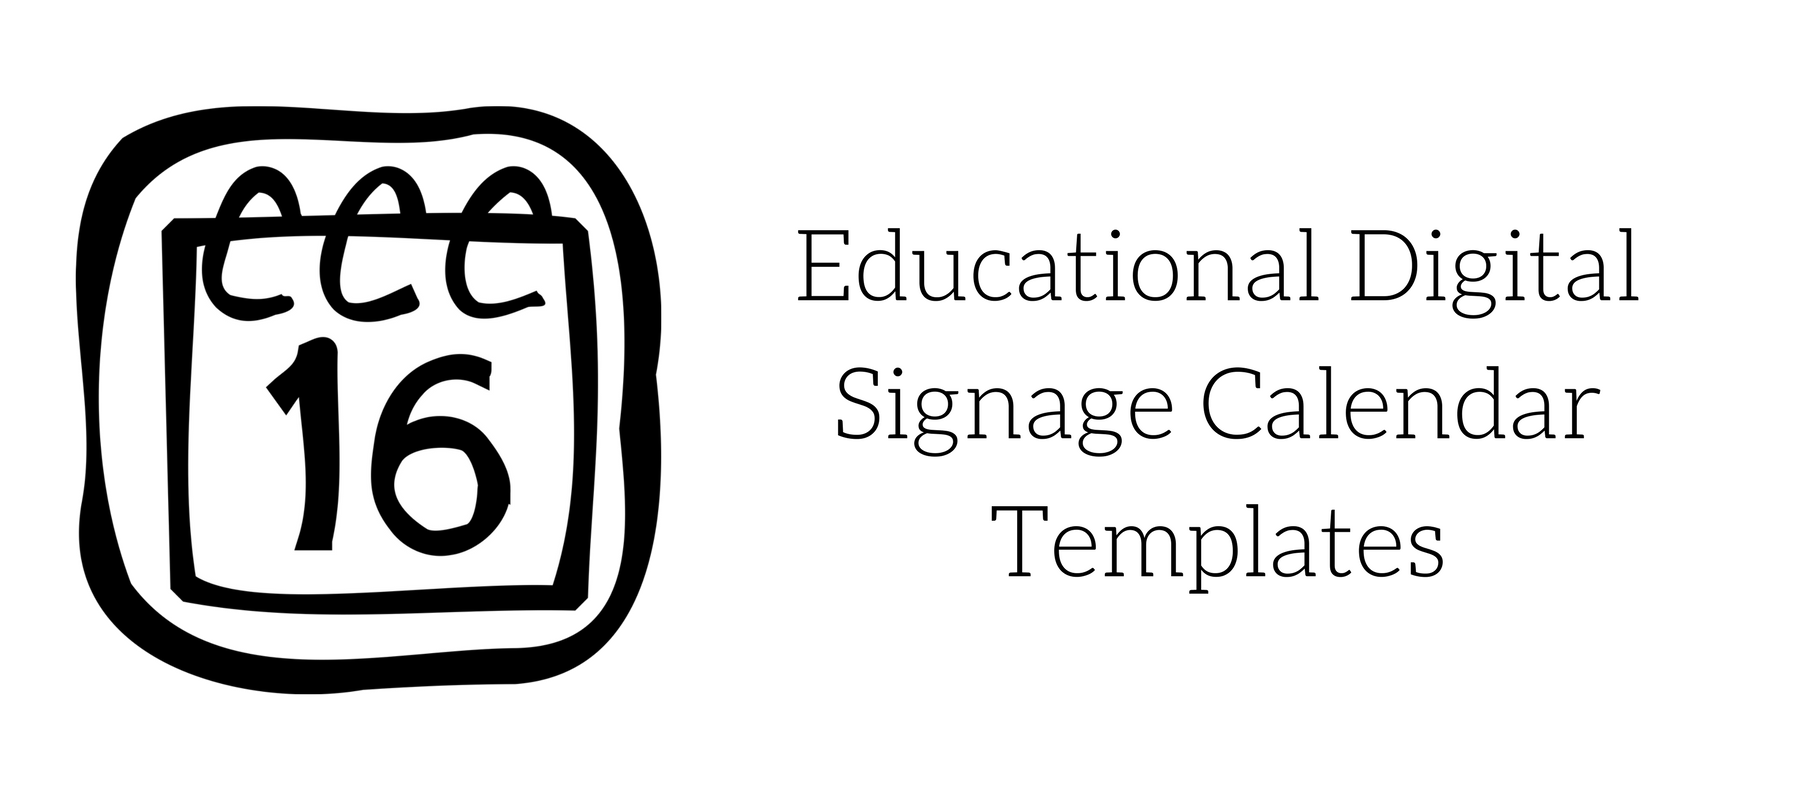 Educational Digital Signage Calendar Templates